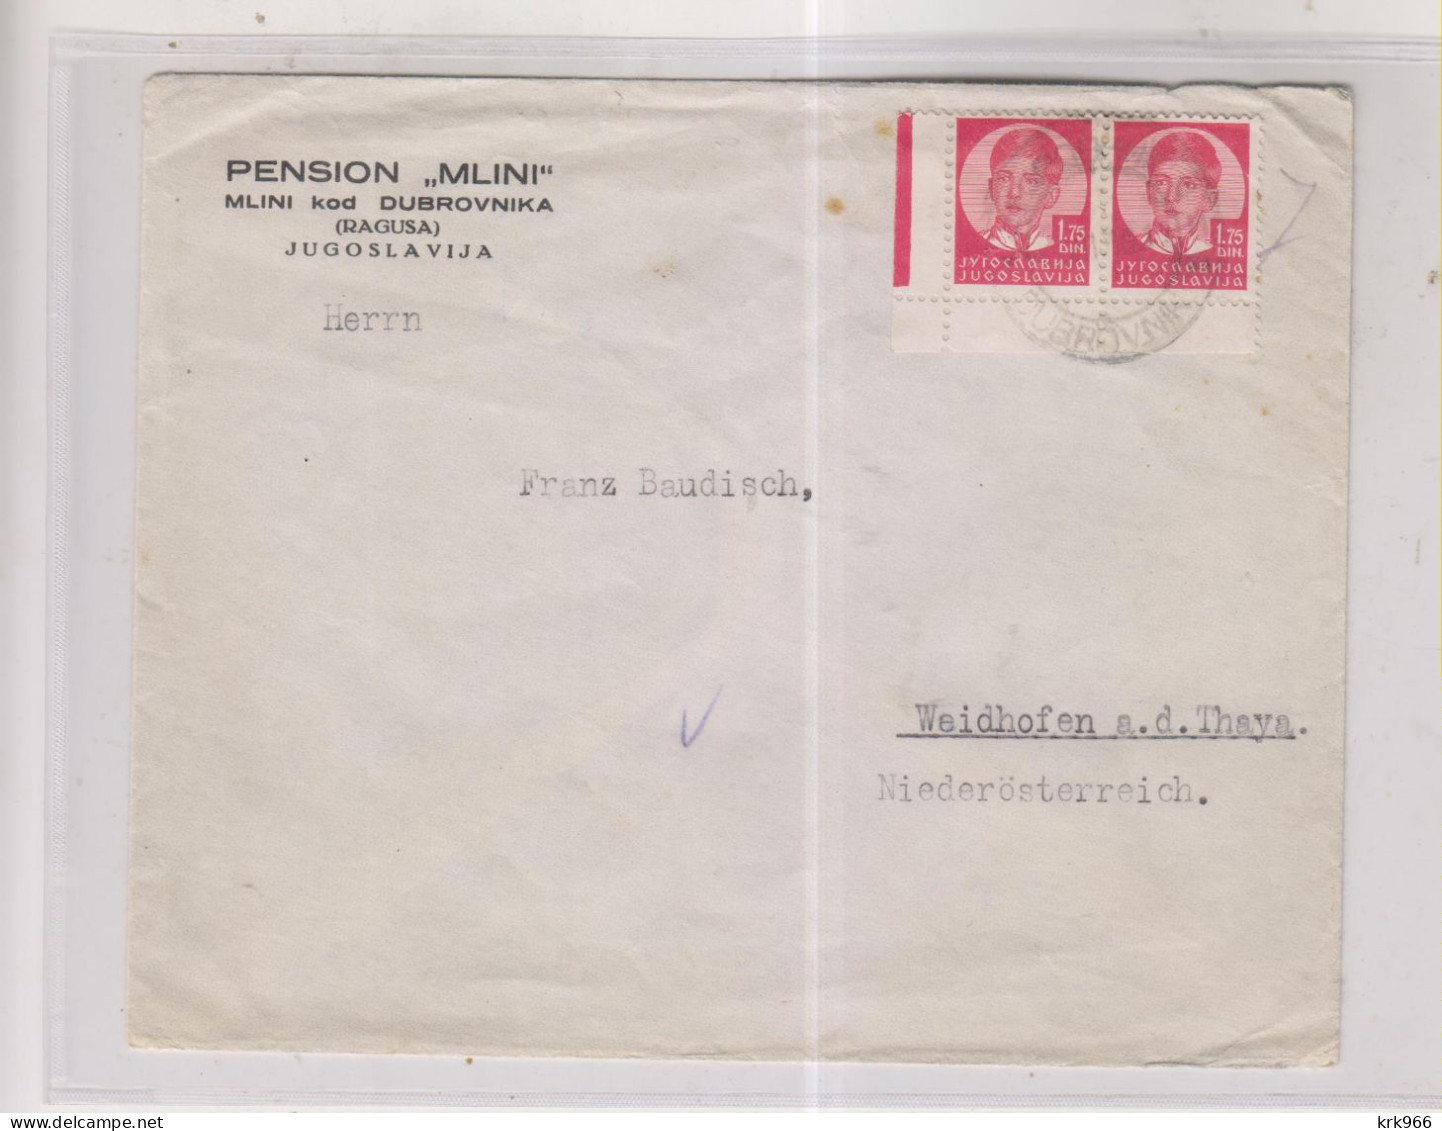 YUGOSLAVIA 1936 DUBROVNIK Mice Cover To Austria PENSION MLINI - Briefe U. Dokumente